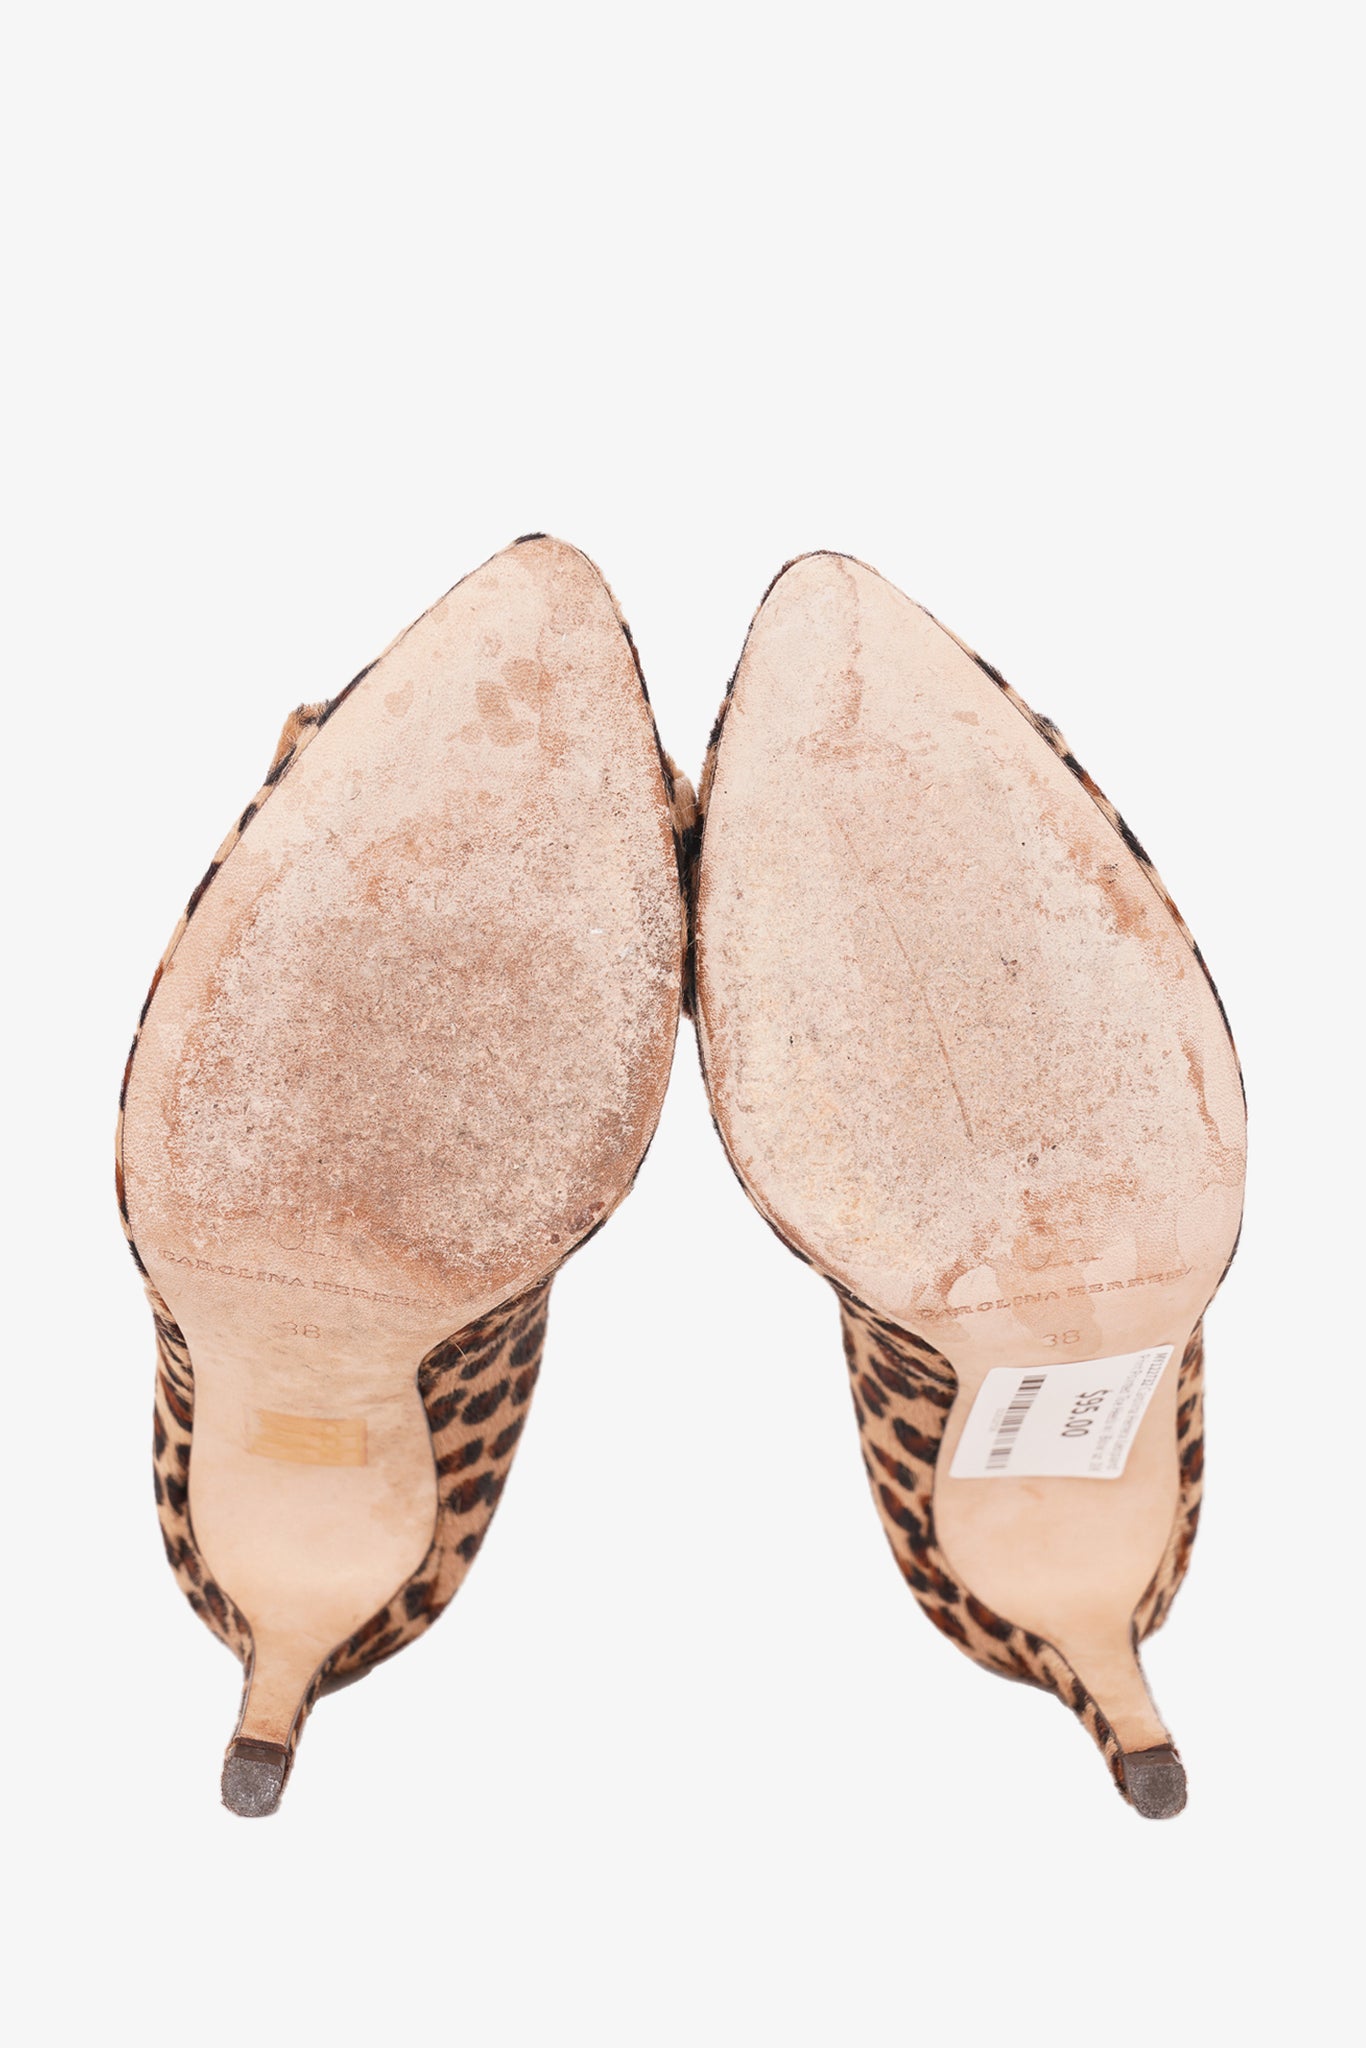 Carolina Herrera Leopard Print Pointed Toe Heels with Bow Size 38